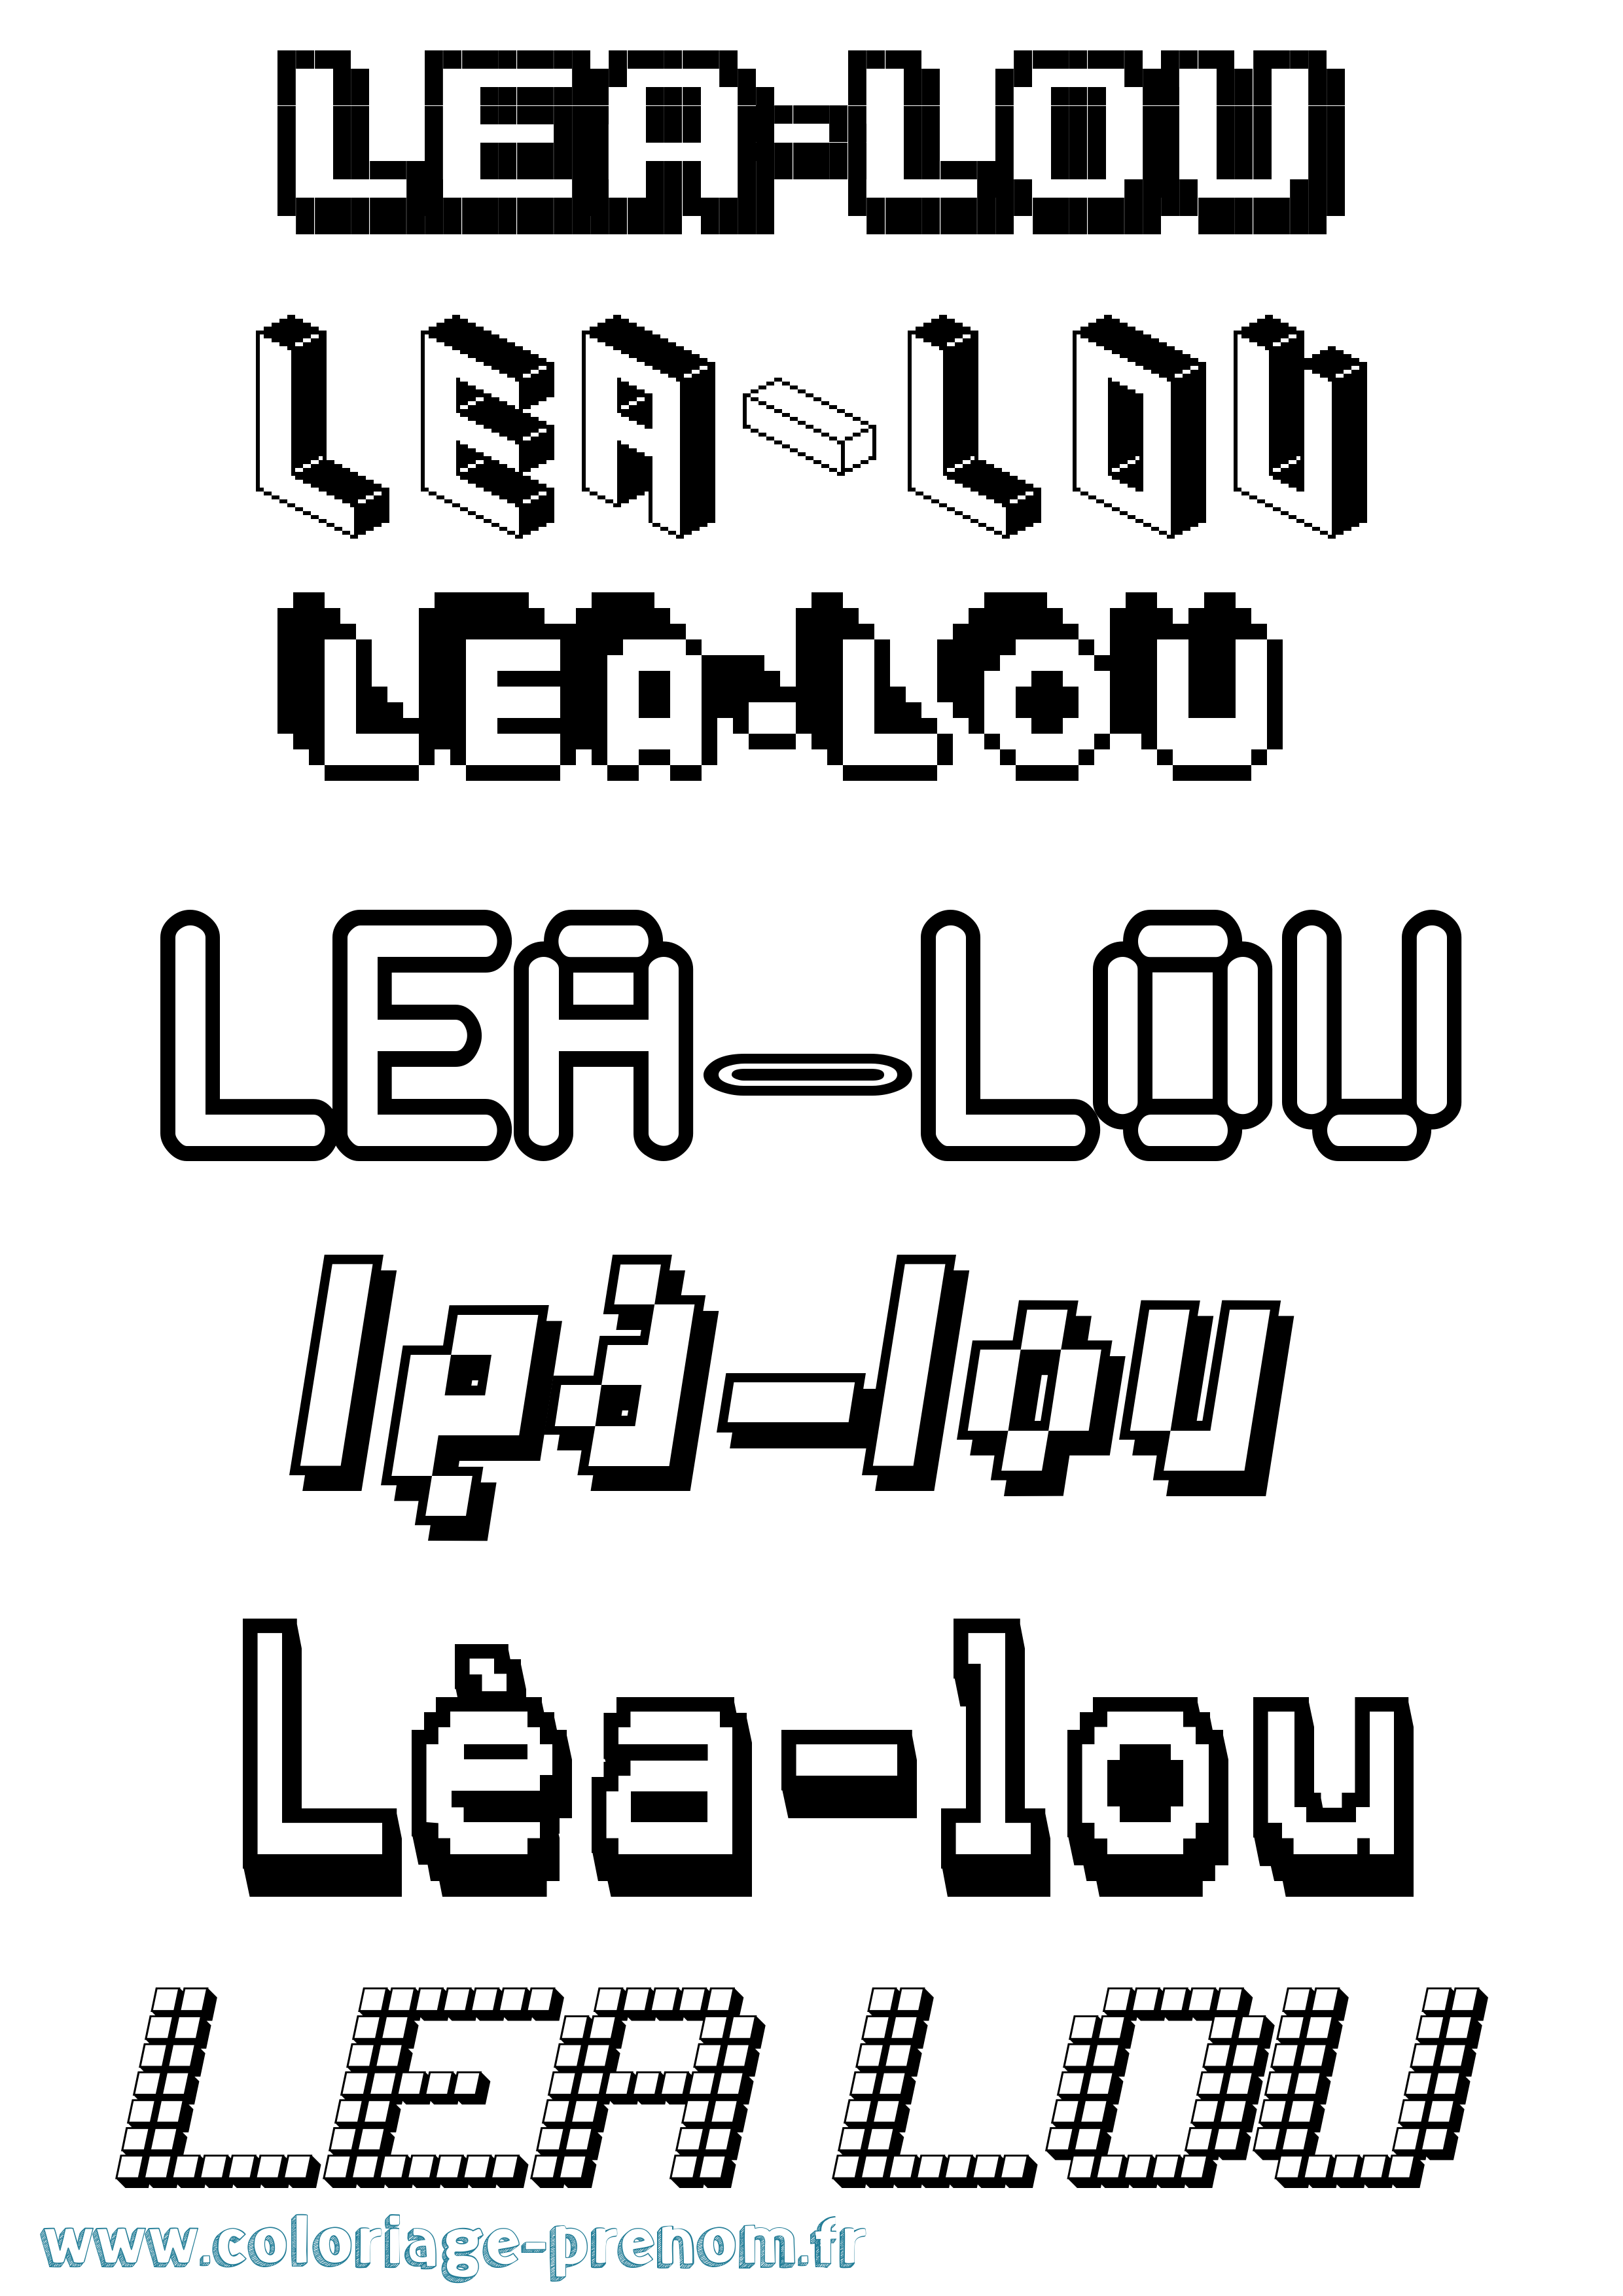 Coloriage prénom Léa-Lou Pixel